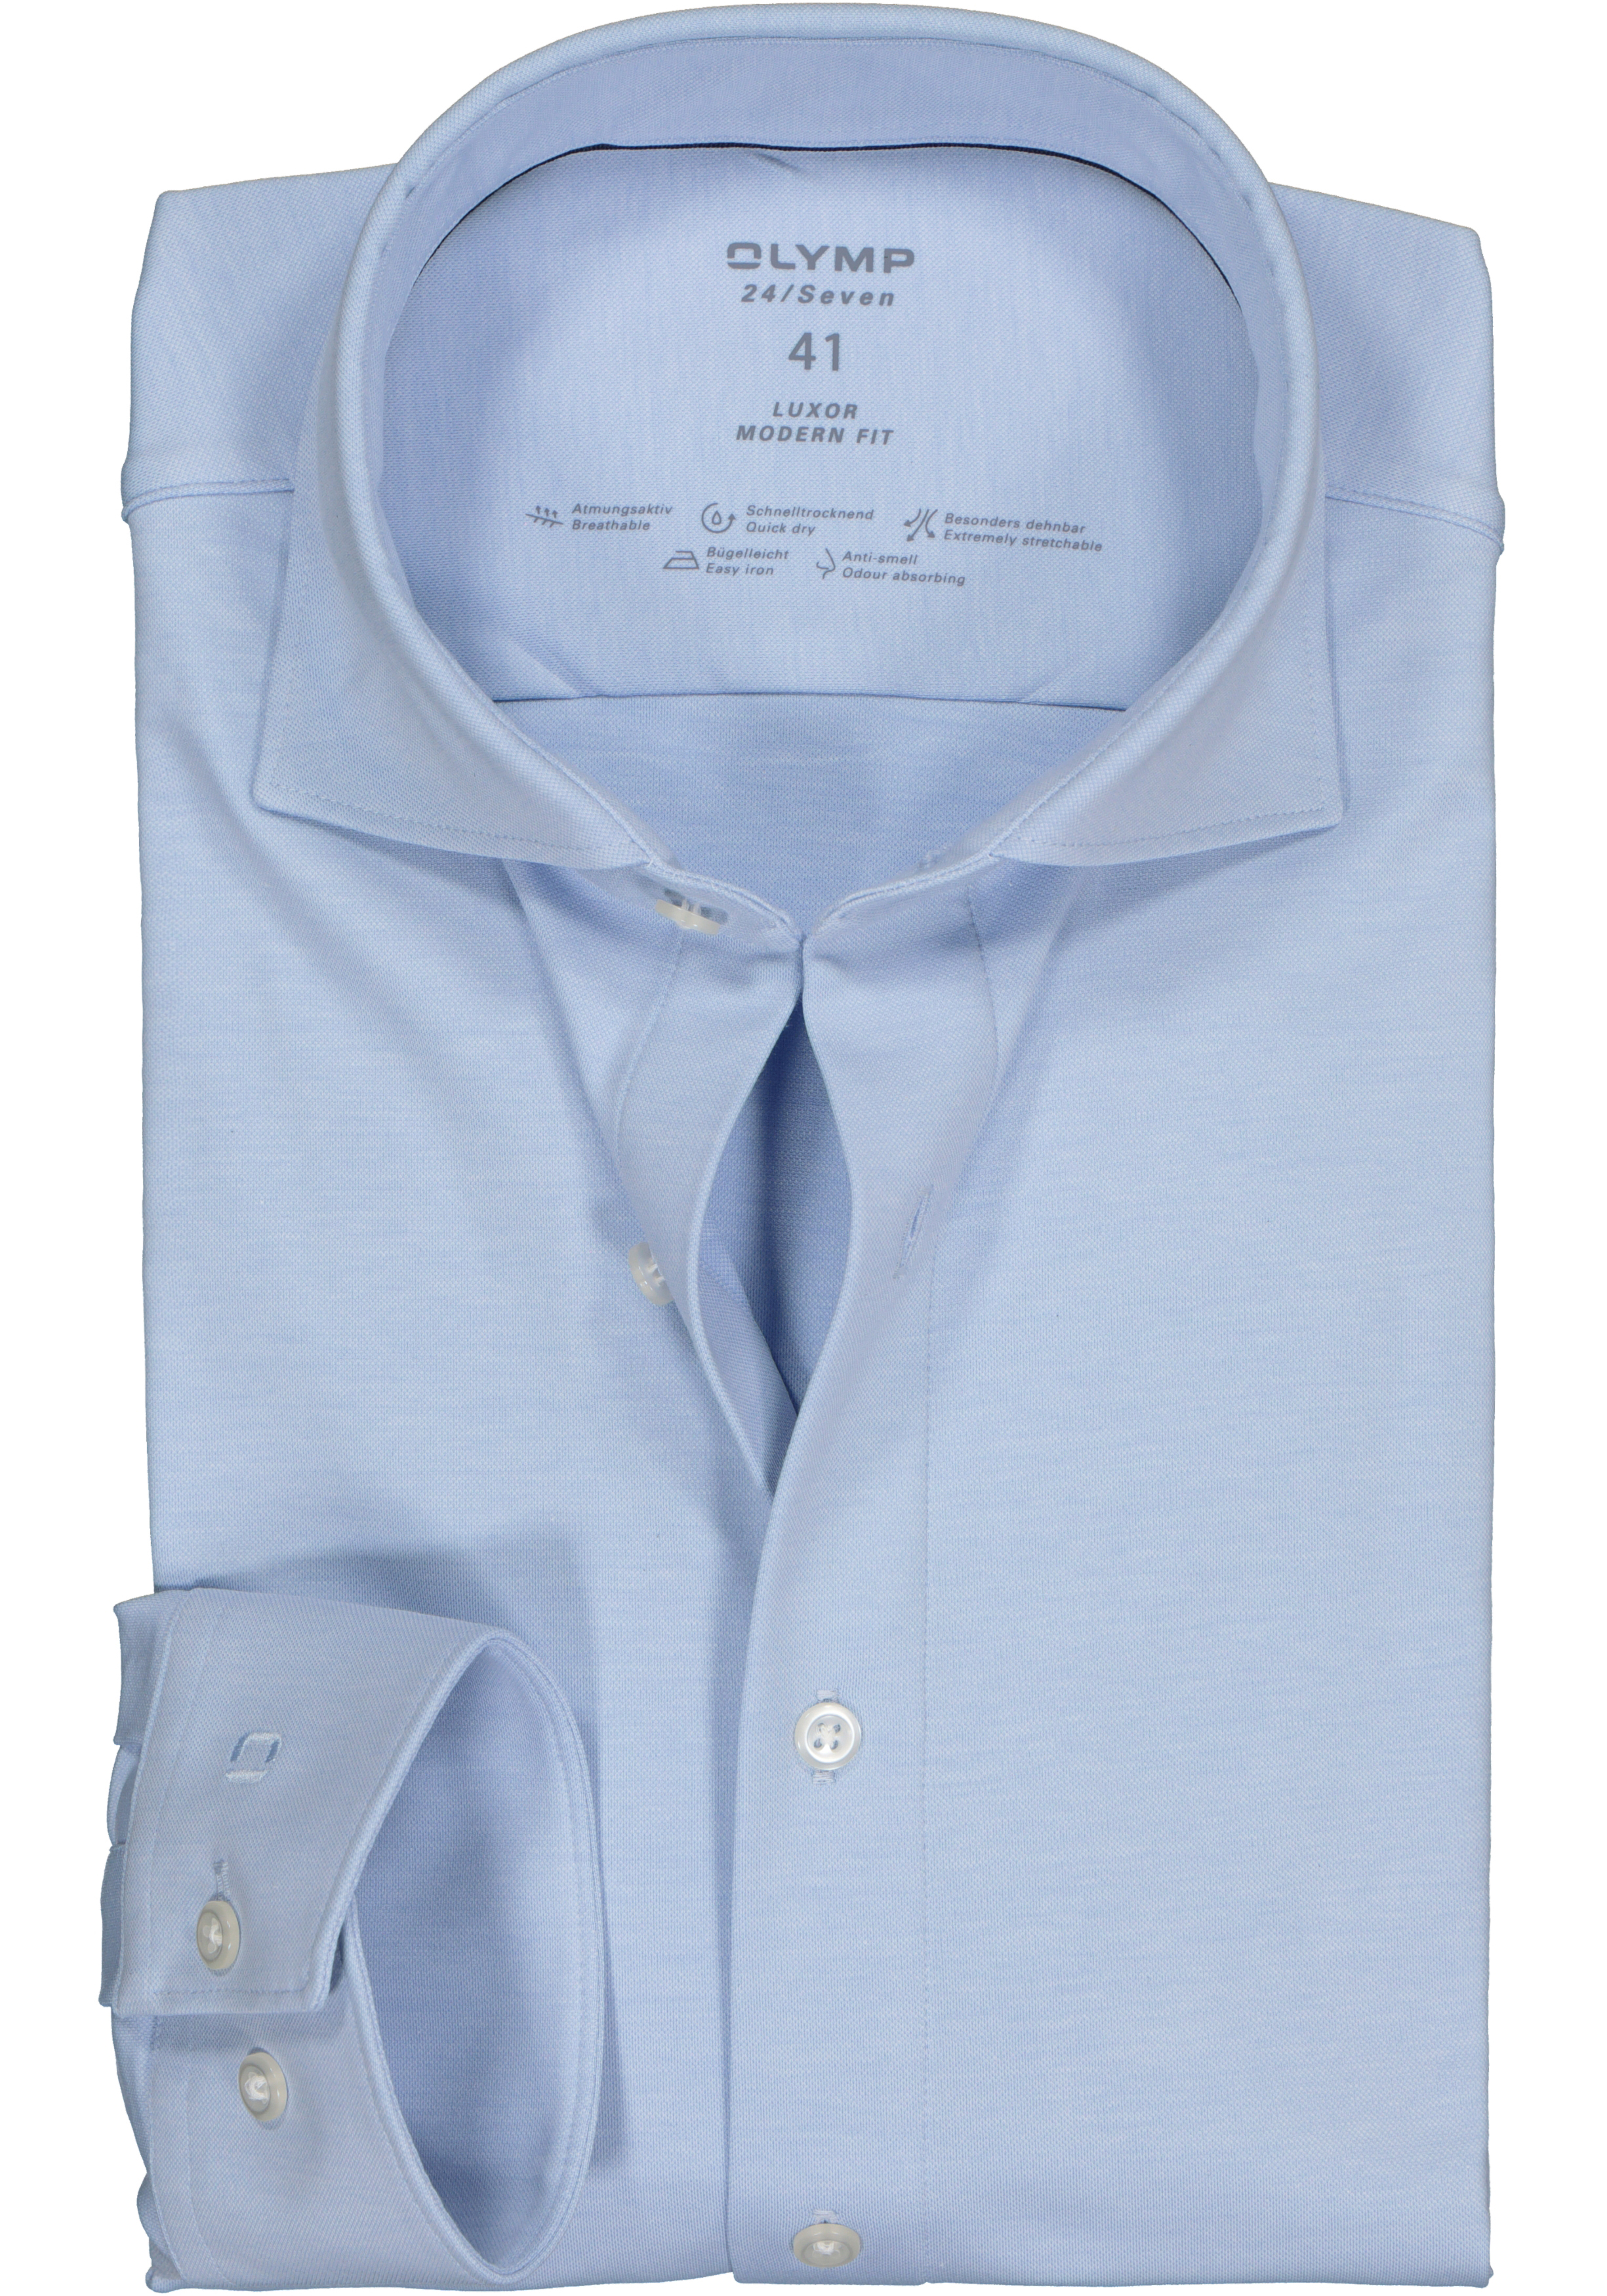 OLYMP Luxor 24/Seven modern fit overhemd, mouwlengte 7, lichtblauw tricot